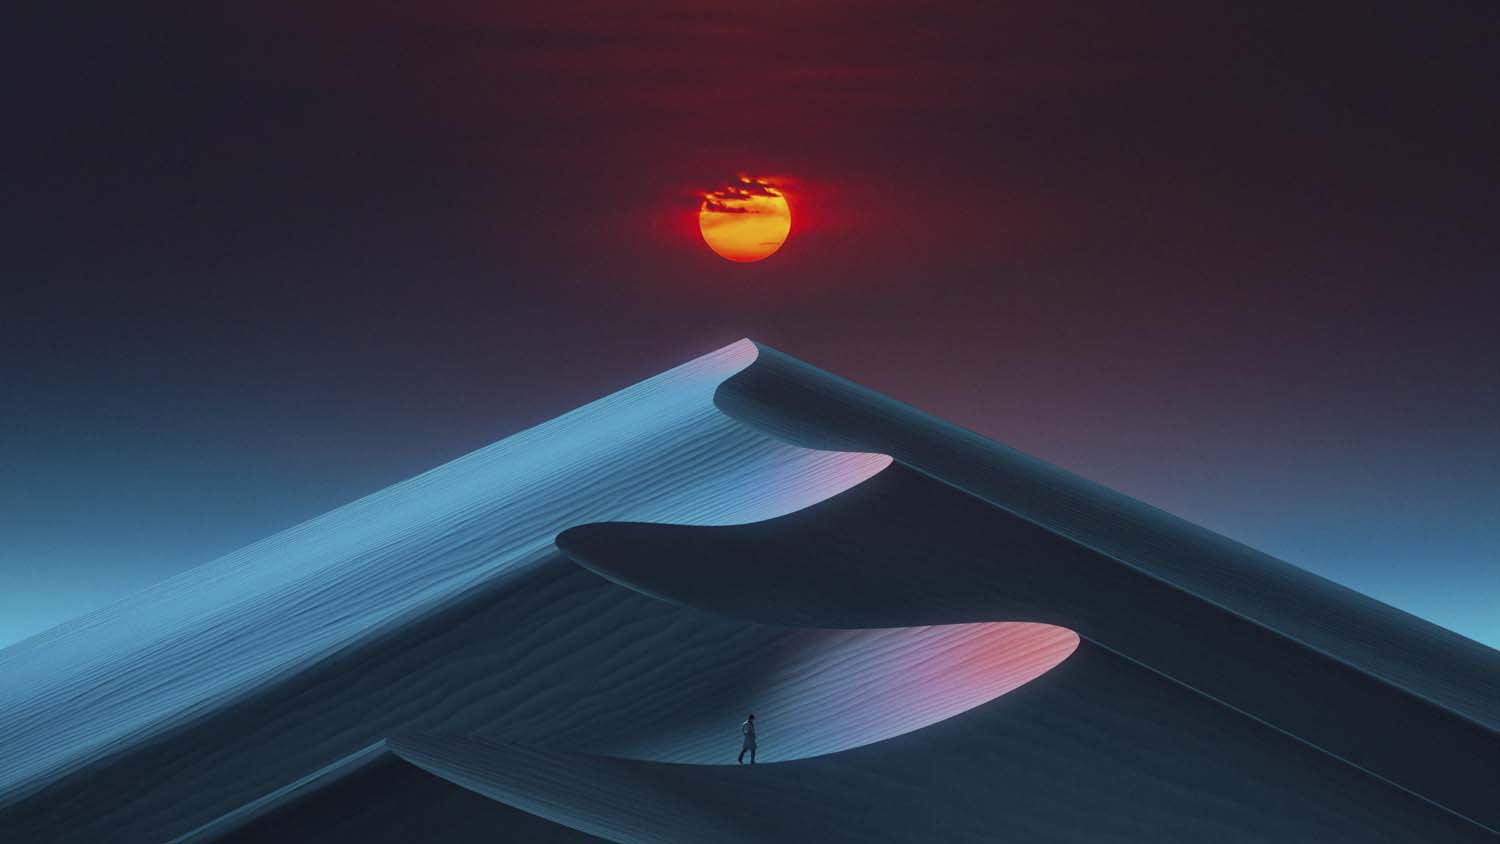 digital artartwork illustration nature landscape desert dunes sand men alon esky Sun